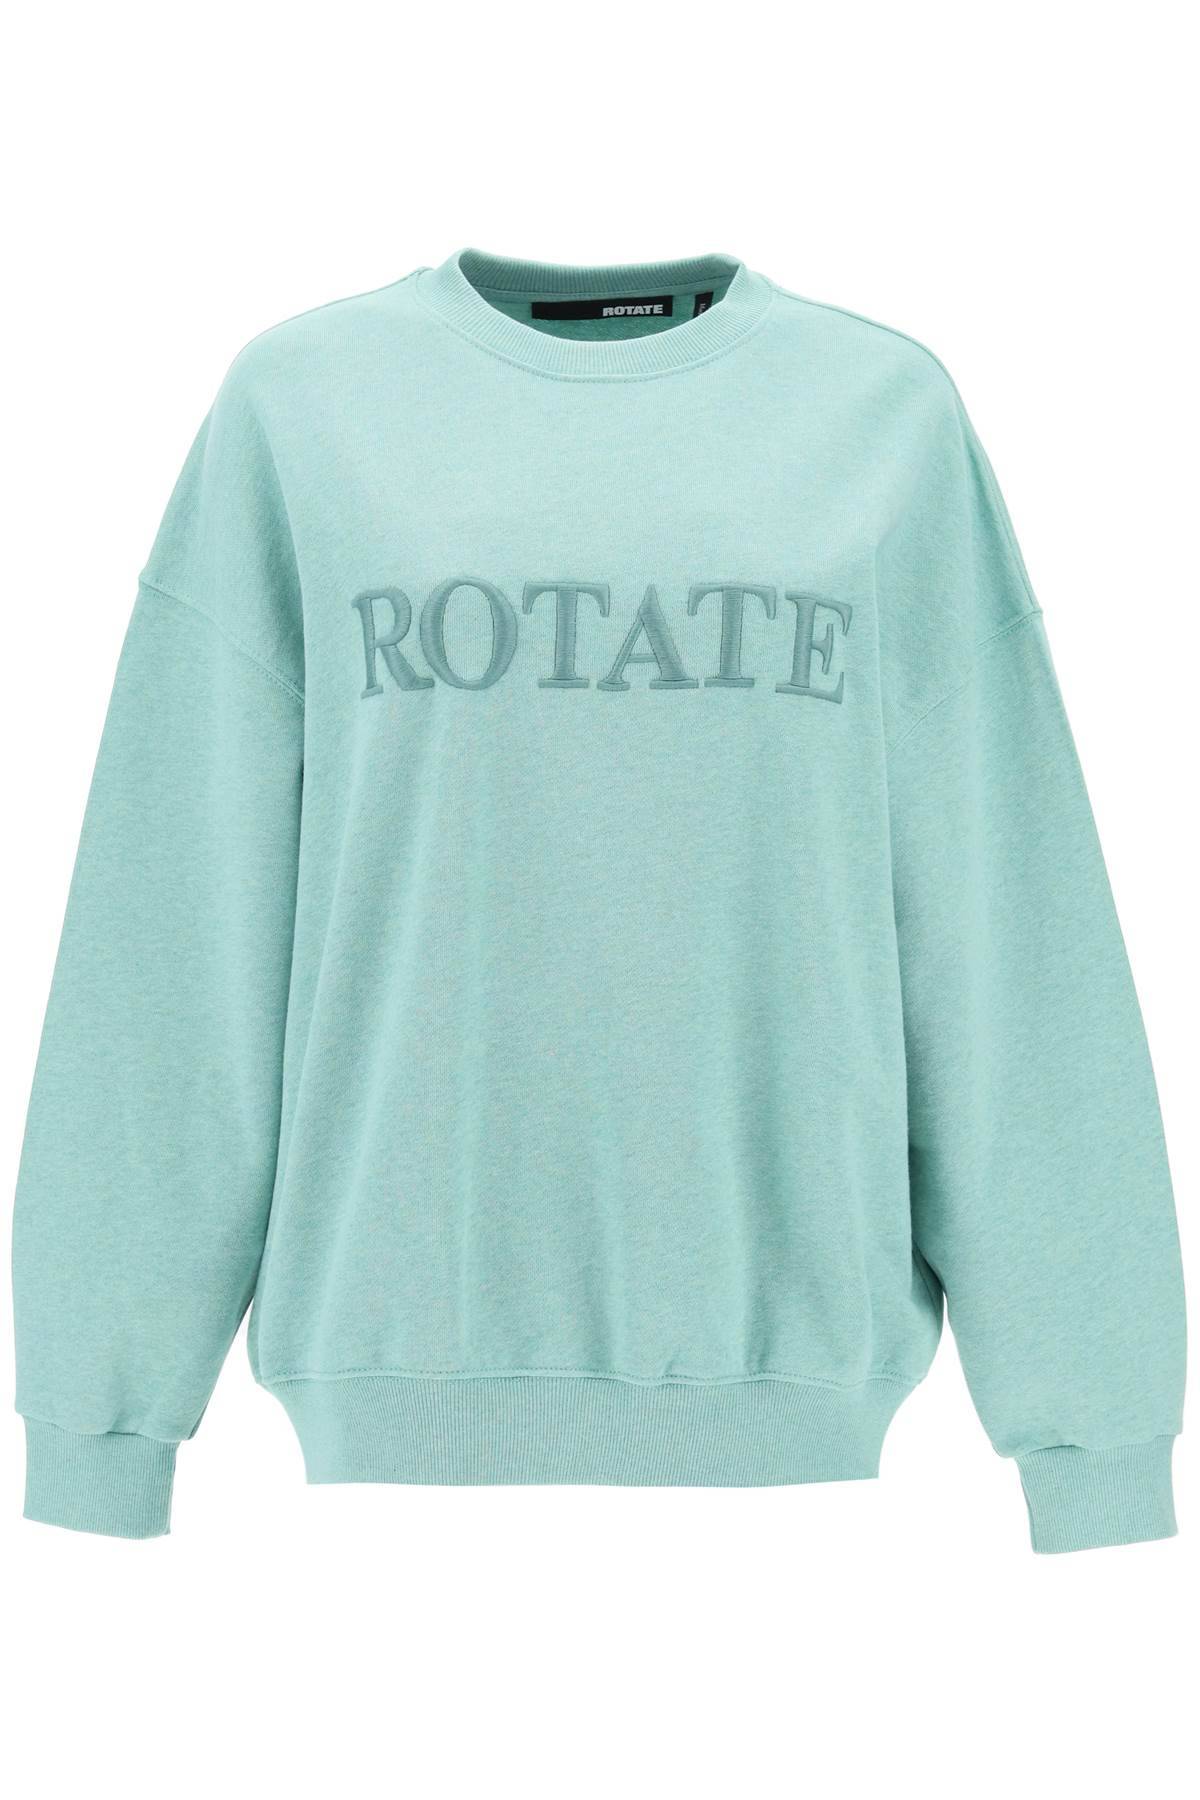 Rotate ROTATE organic cotton crewneck sweatshirt